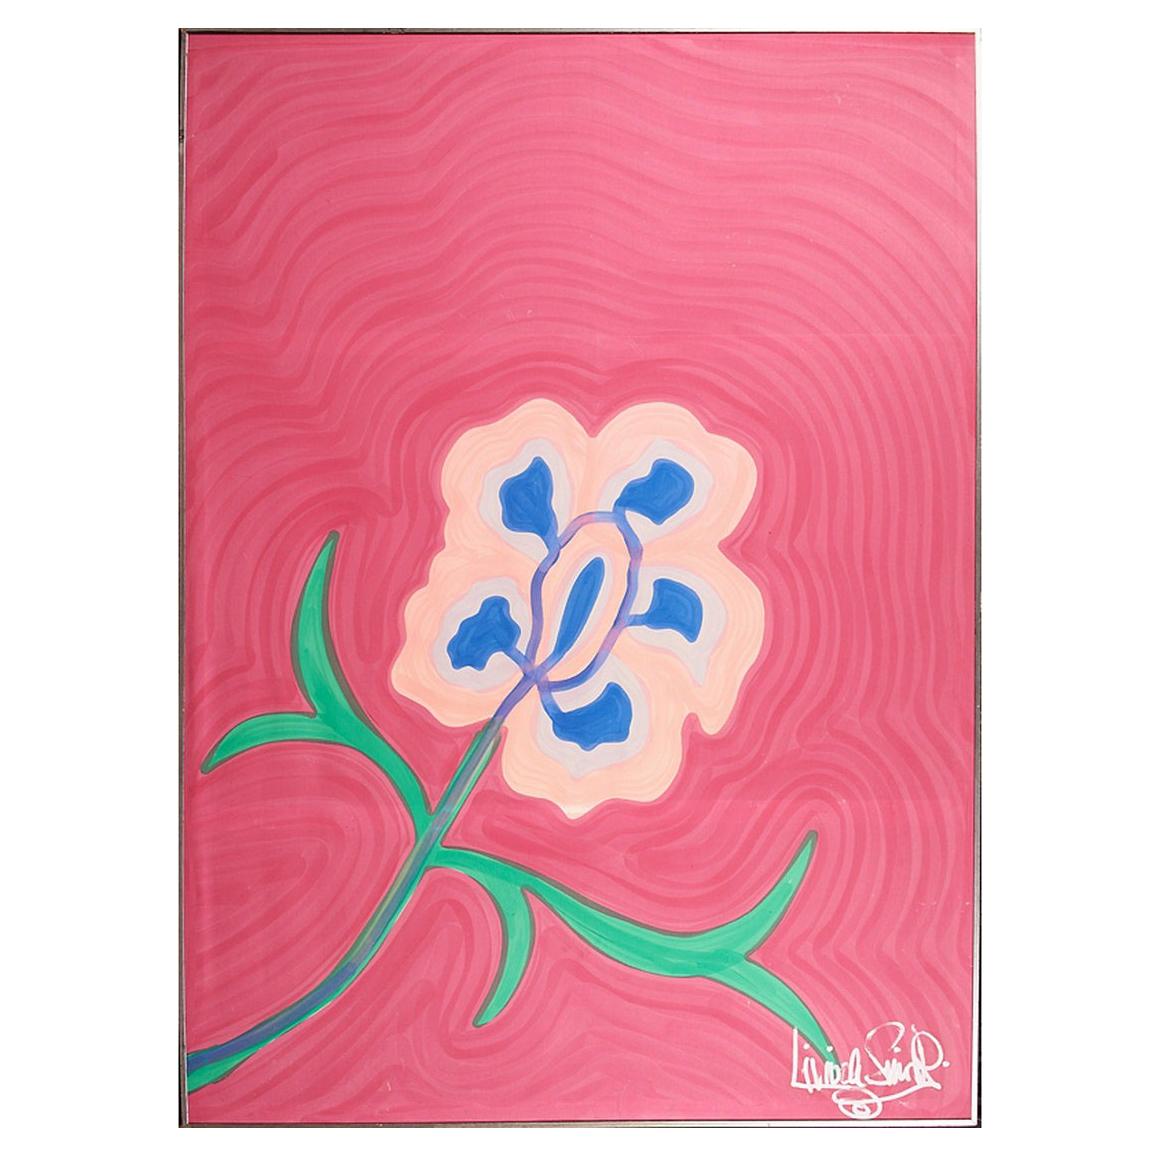 Large, Signed, Framed Livio De Simone Original Hand Painted Flower on Fabric For Sale